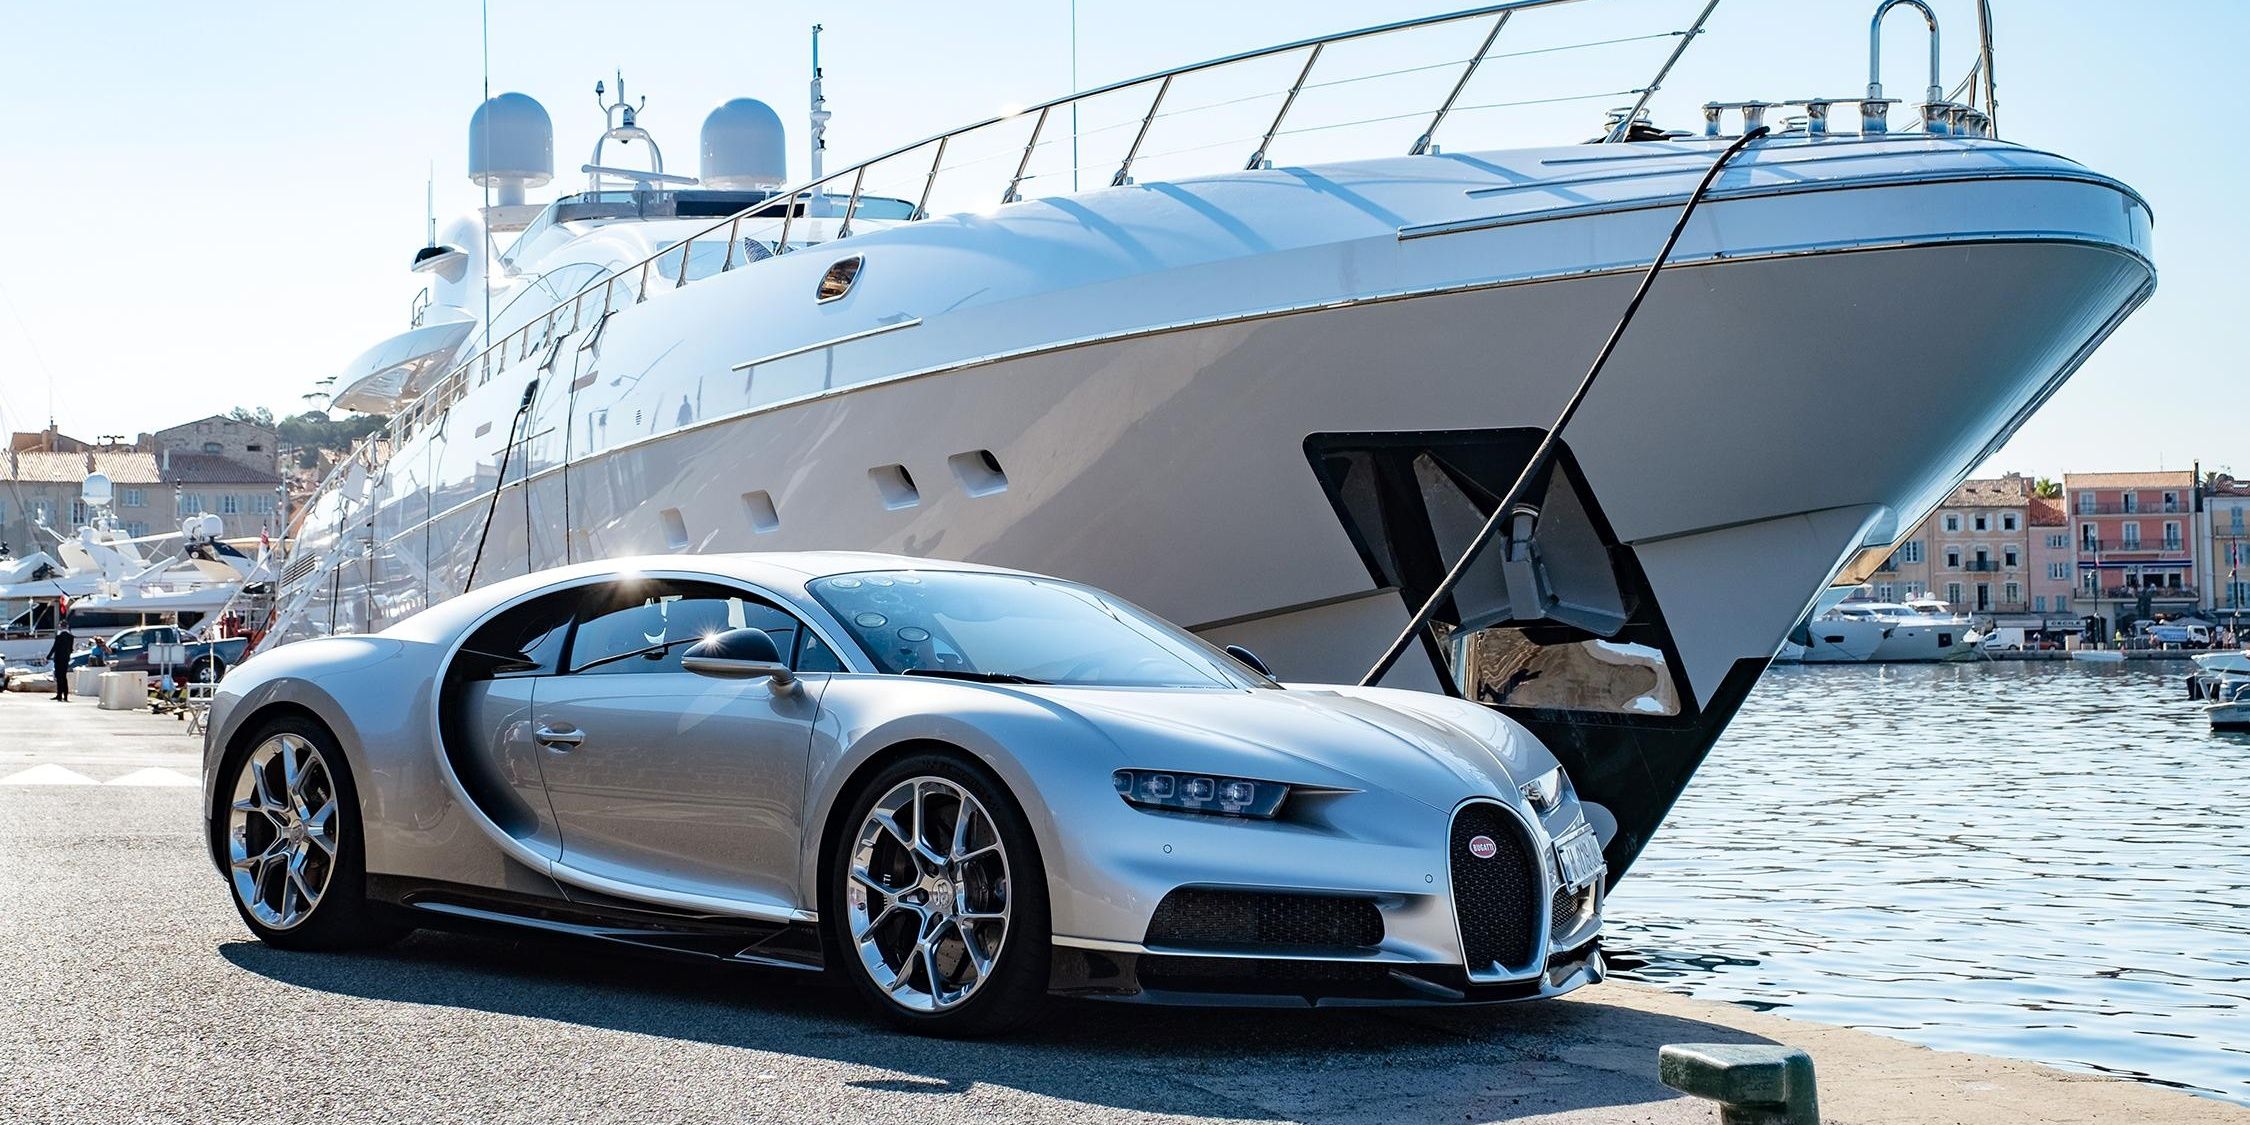 A silver Bugatti Chiron parked beside a luxury yacht